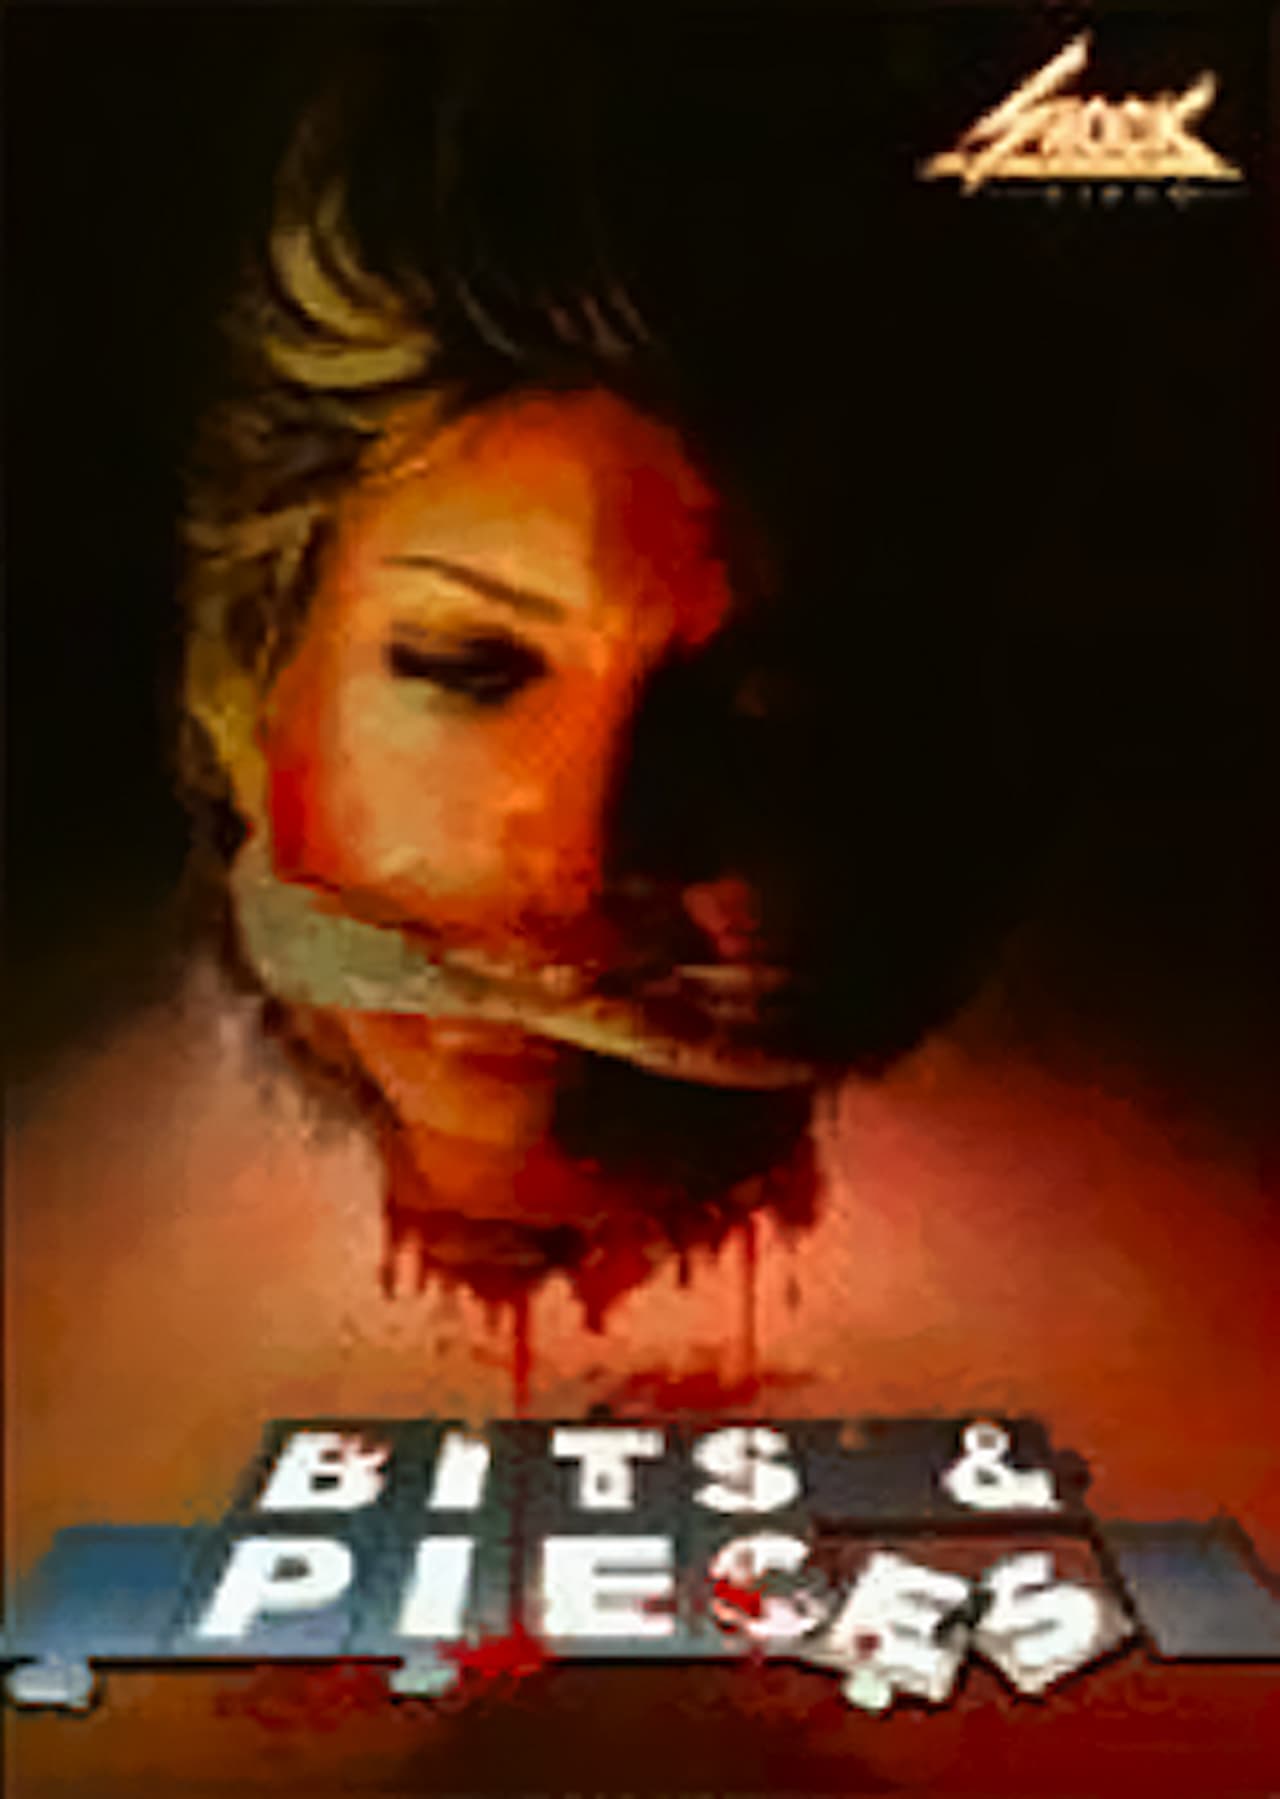 Bits and Pieces (1985) Screenshot 3 